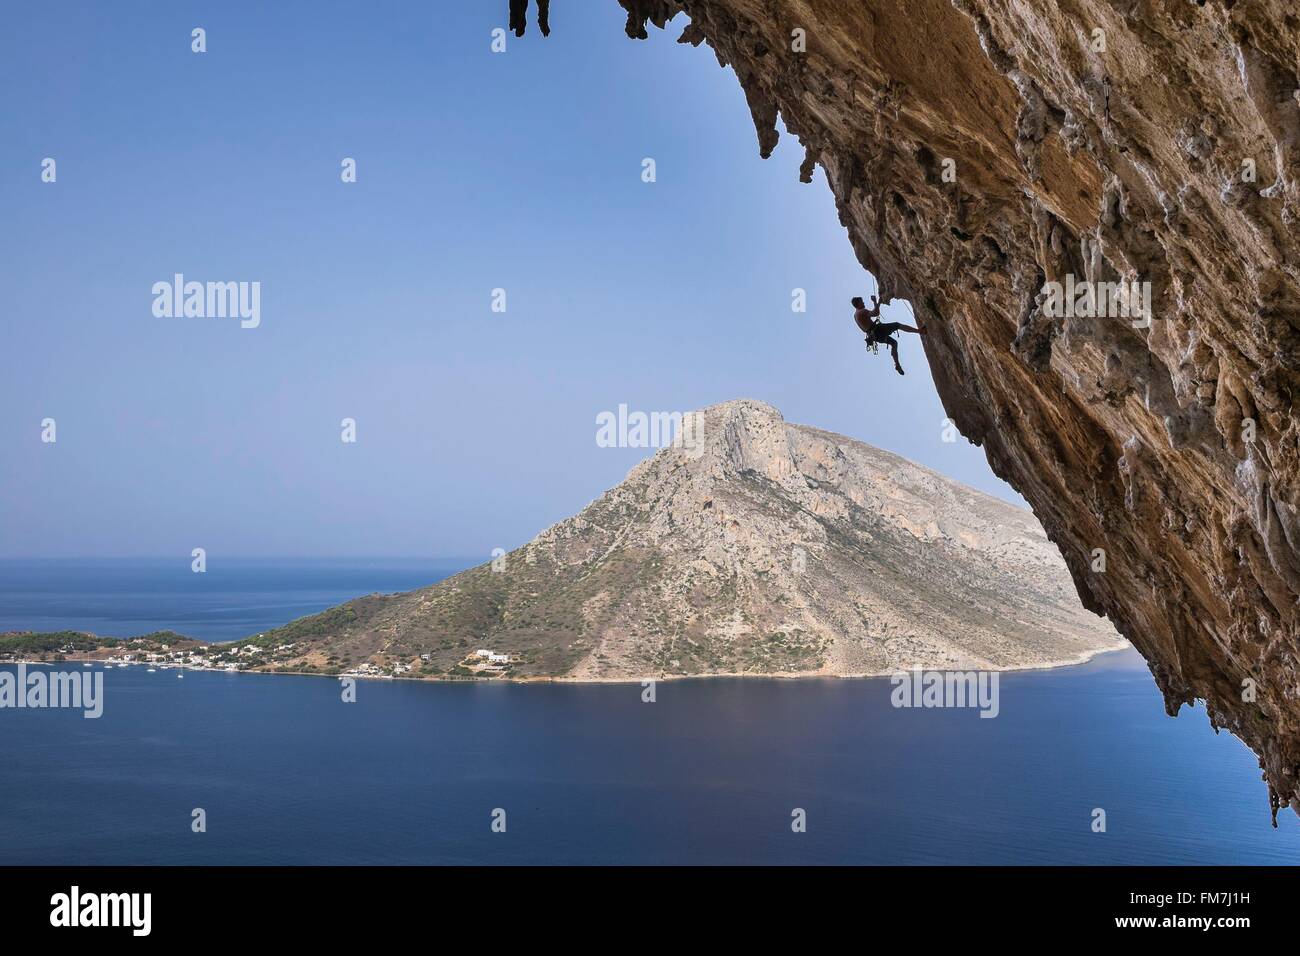 Greece, Dodecanese archipelago, Kalymnos island, Massouri, Telendos islet seen from the Grande Grotta climbing site Stock Photo